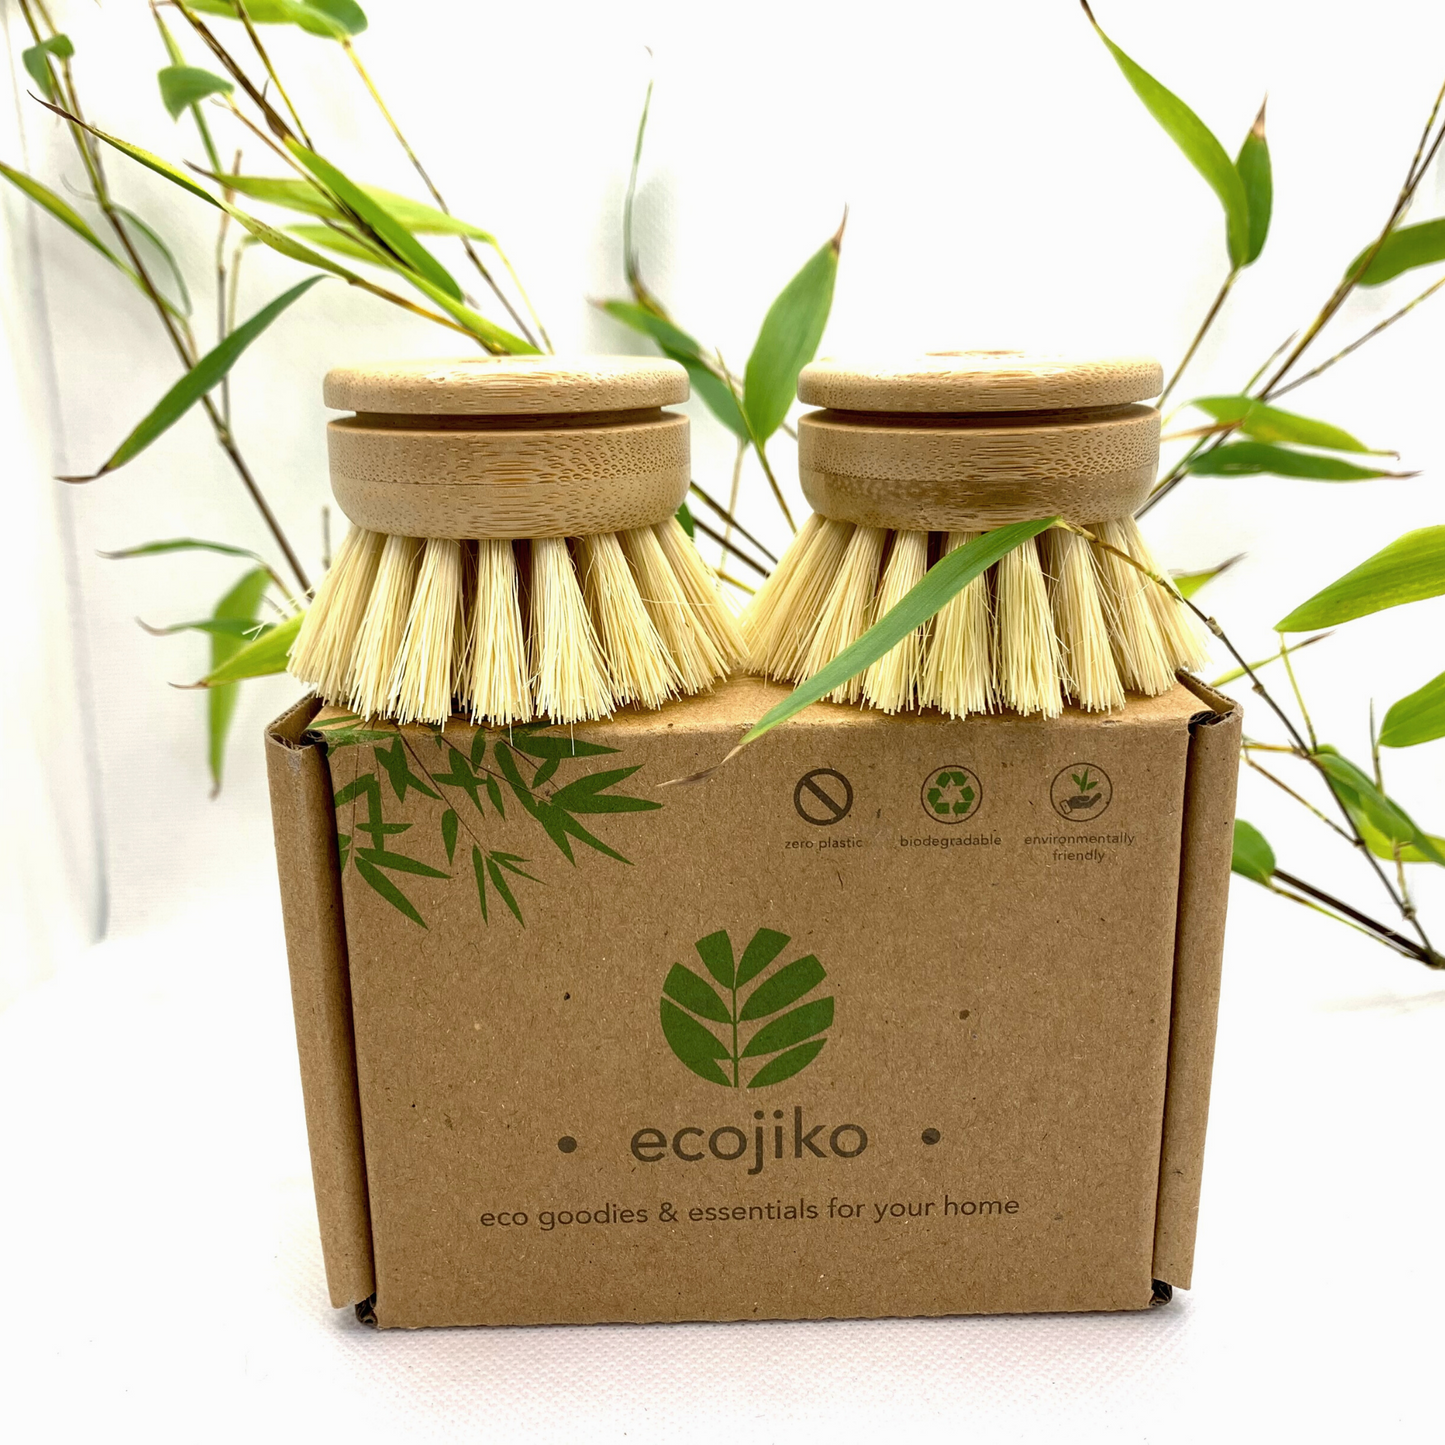 ecojiko bamboo and sisal replacement heads